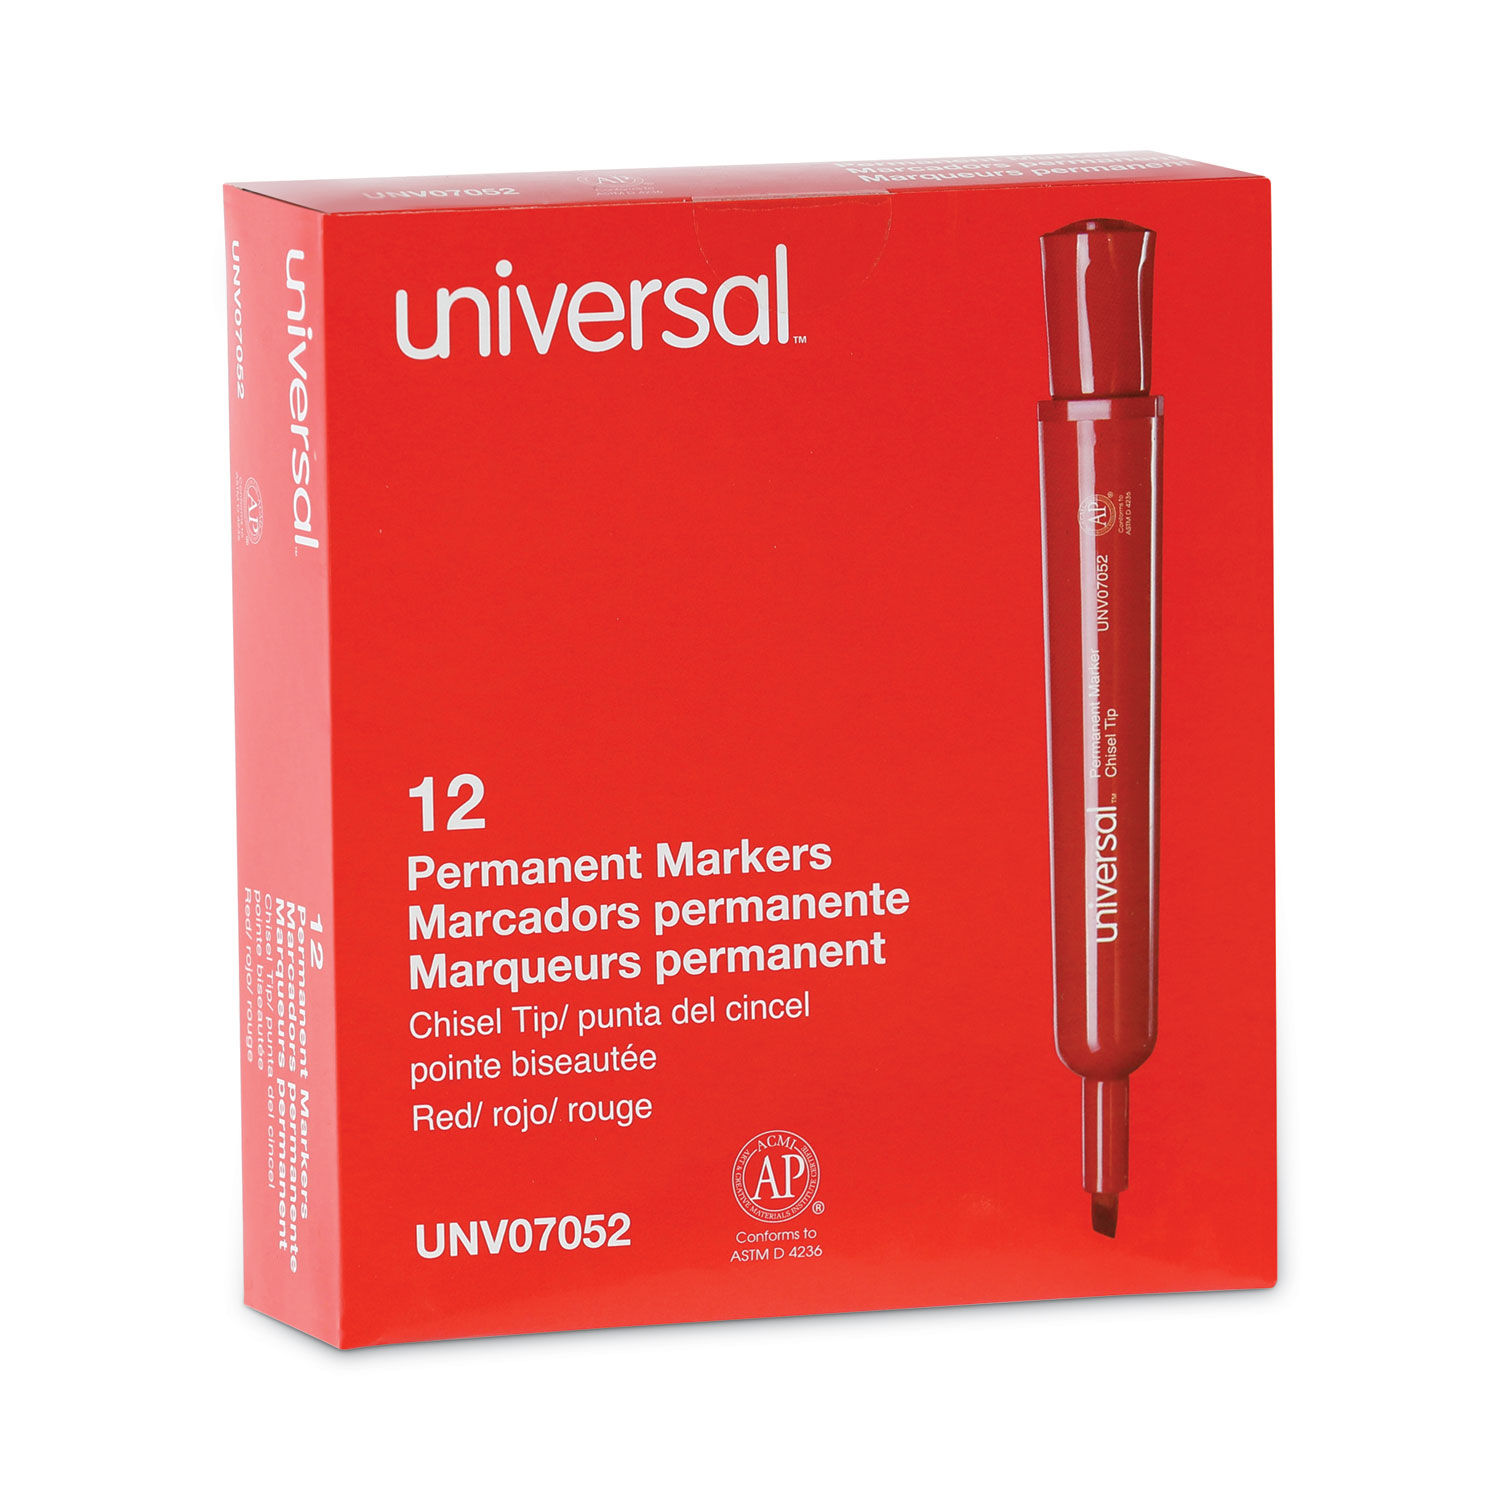 Chisel Tip Permanent Marker by Universalandtrade; UNV07052